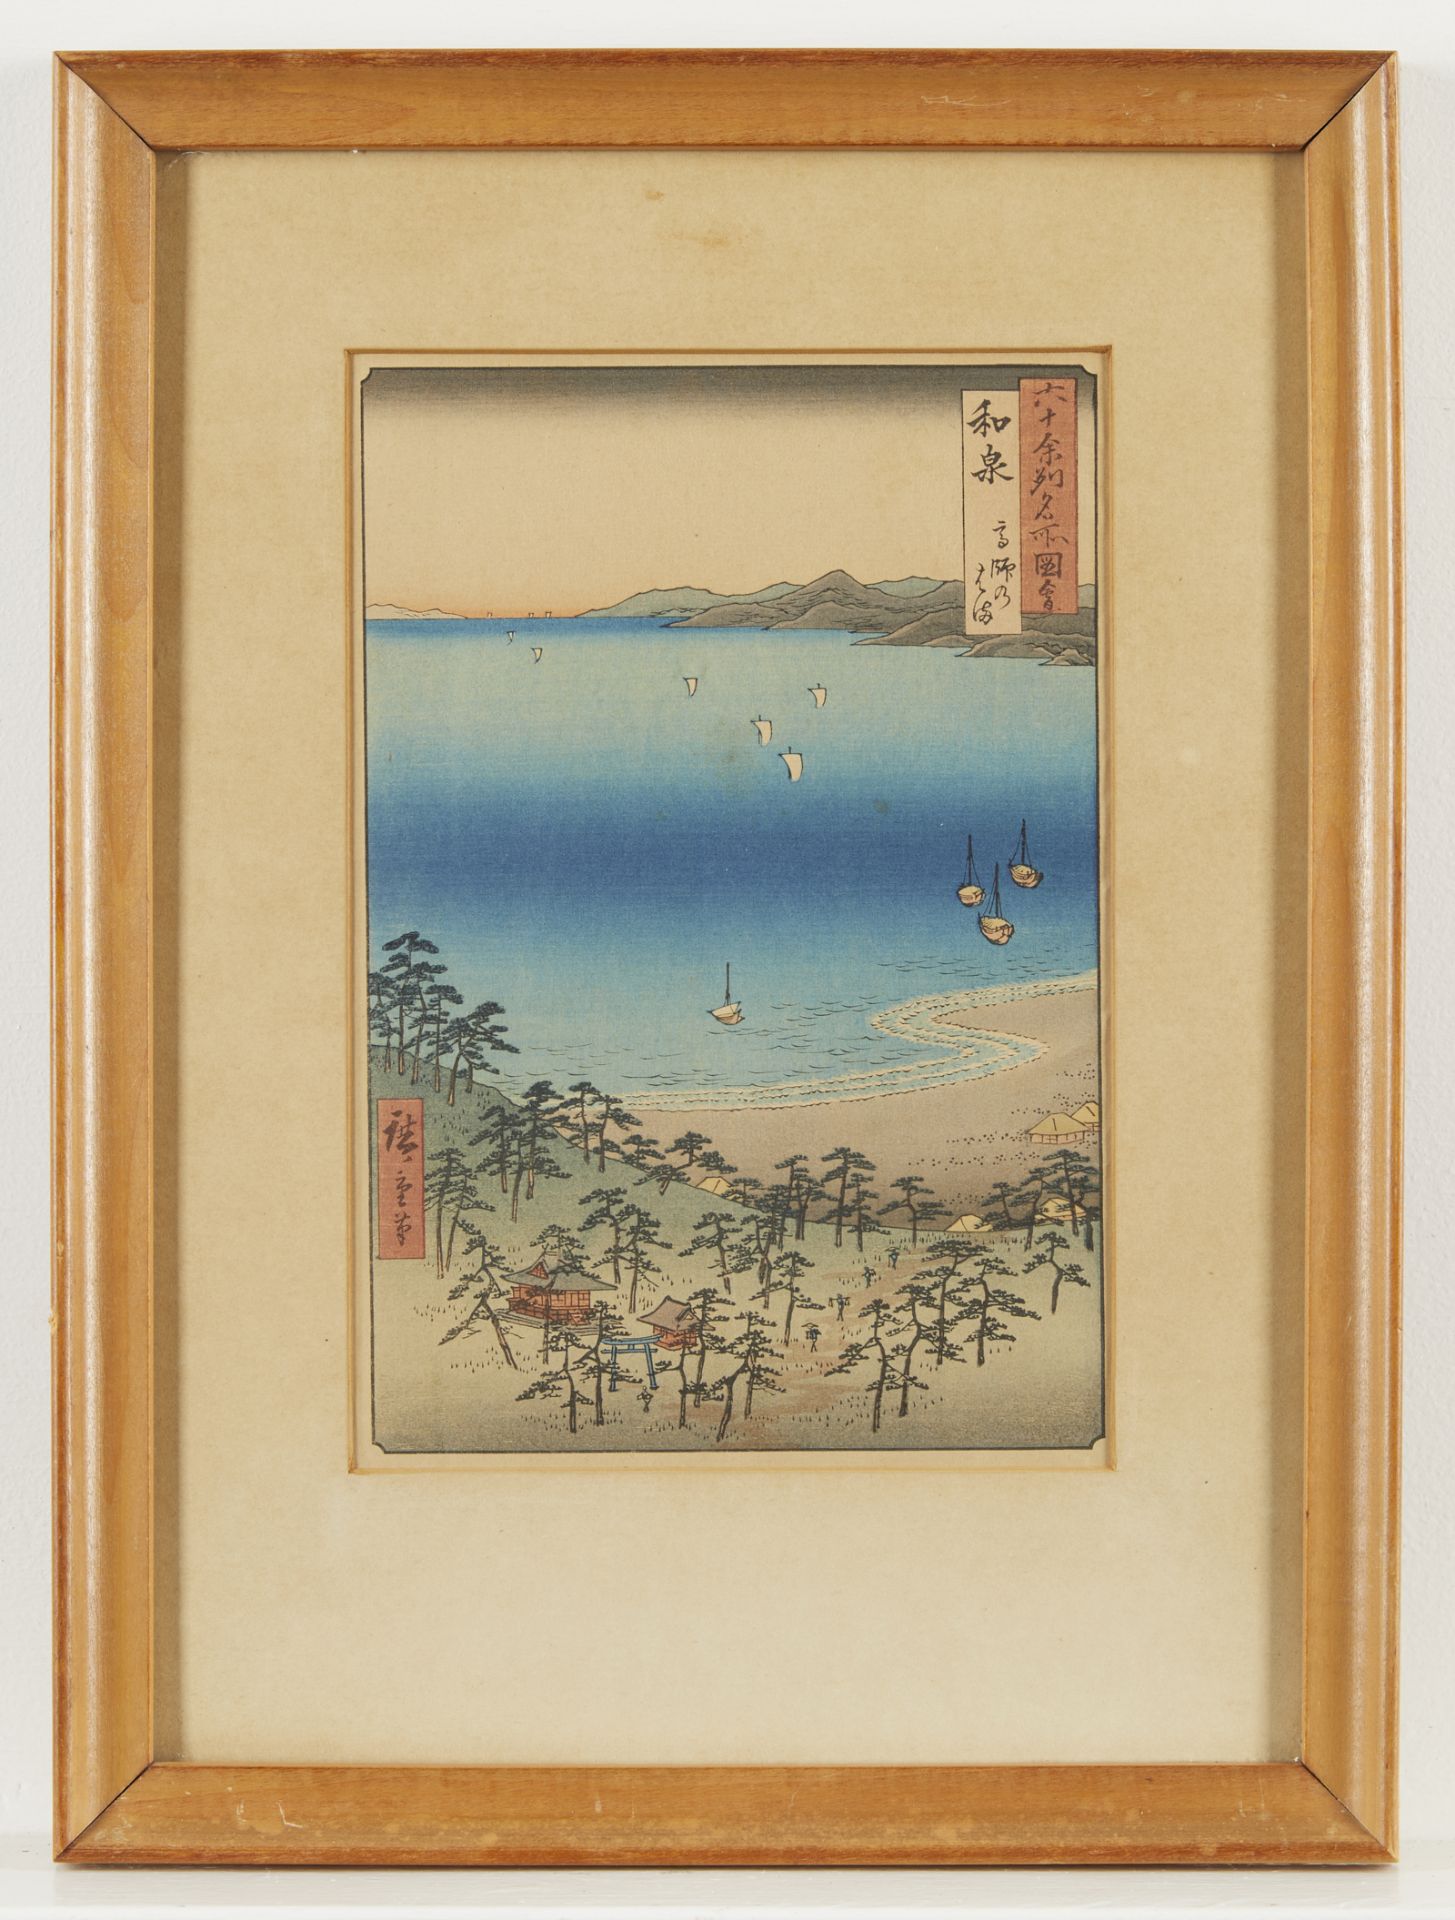 Utagawa Hiroshige "Izumi Beach" Woodblock Print - Image 3 of 7